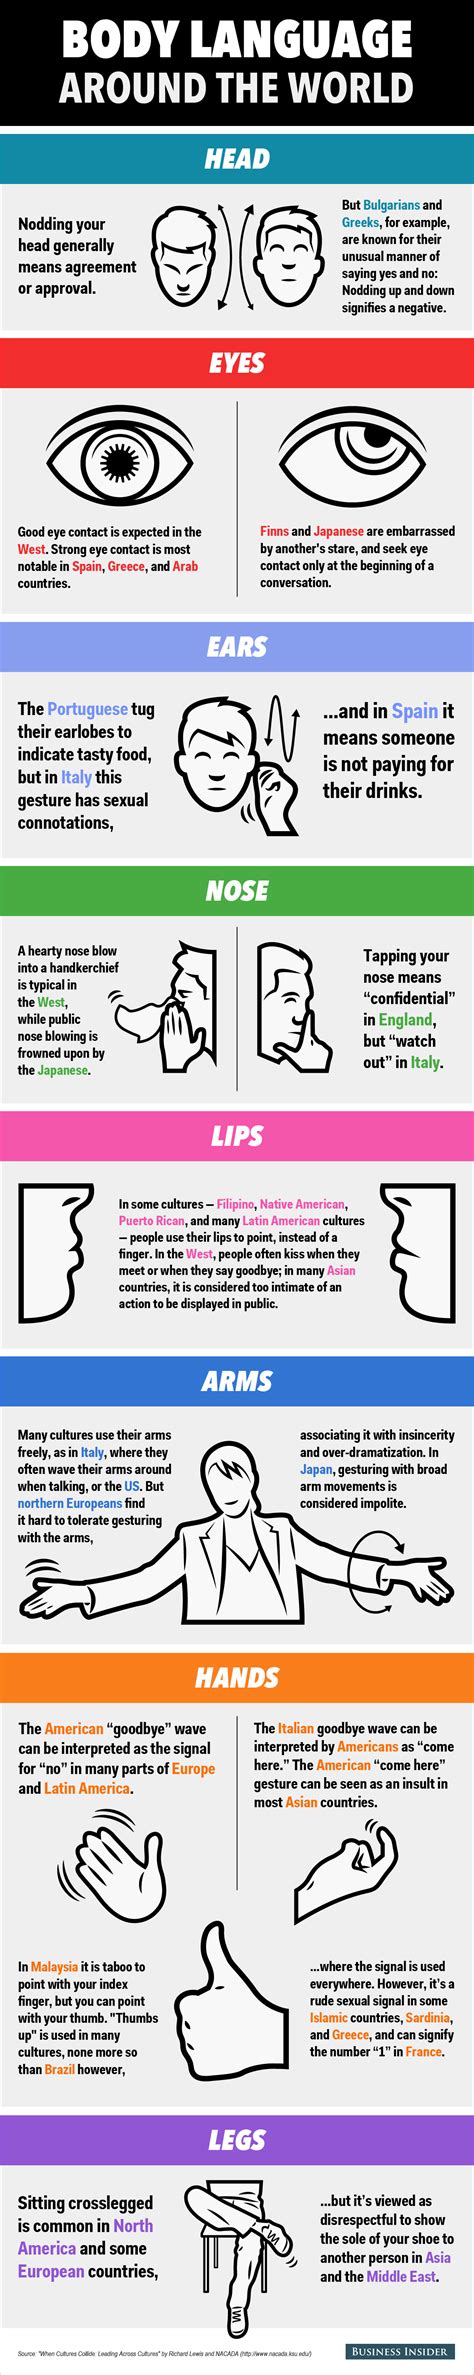 Basic Body Language Around The World